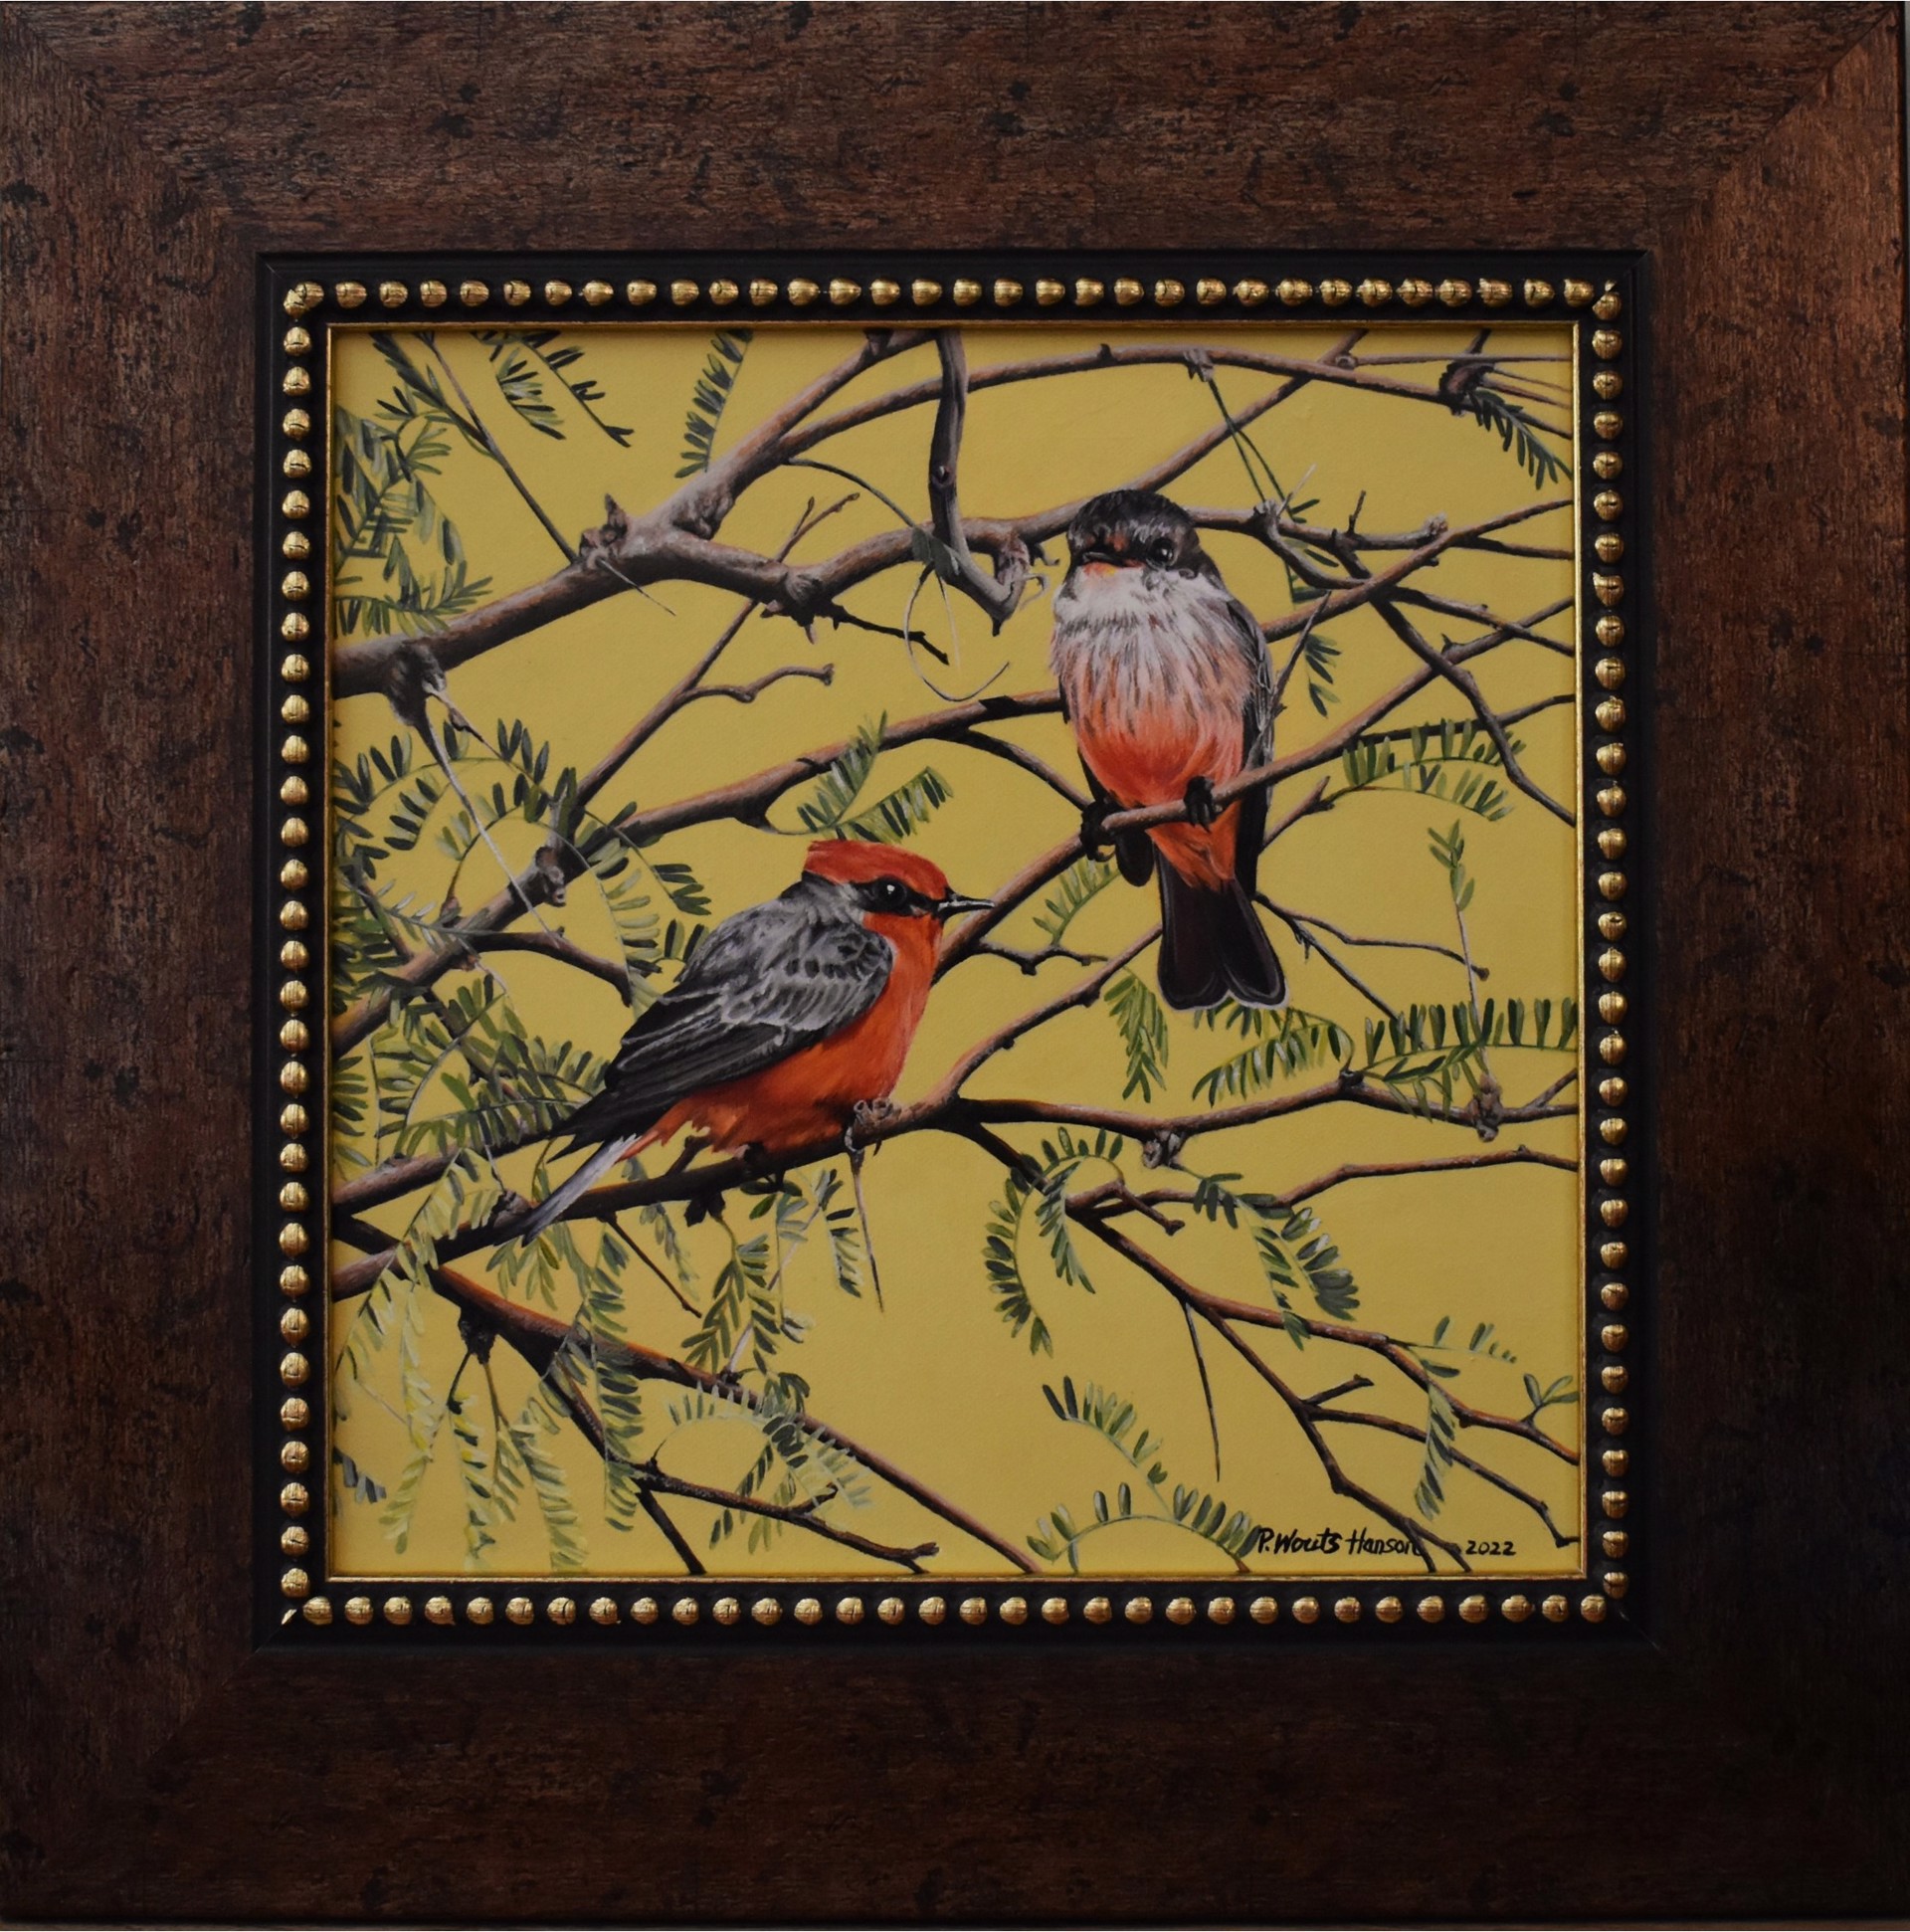 Early Spring Vermillion Flycatchers by Paula Wouts-Hanson